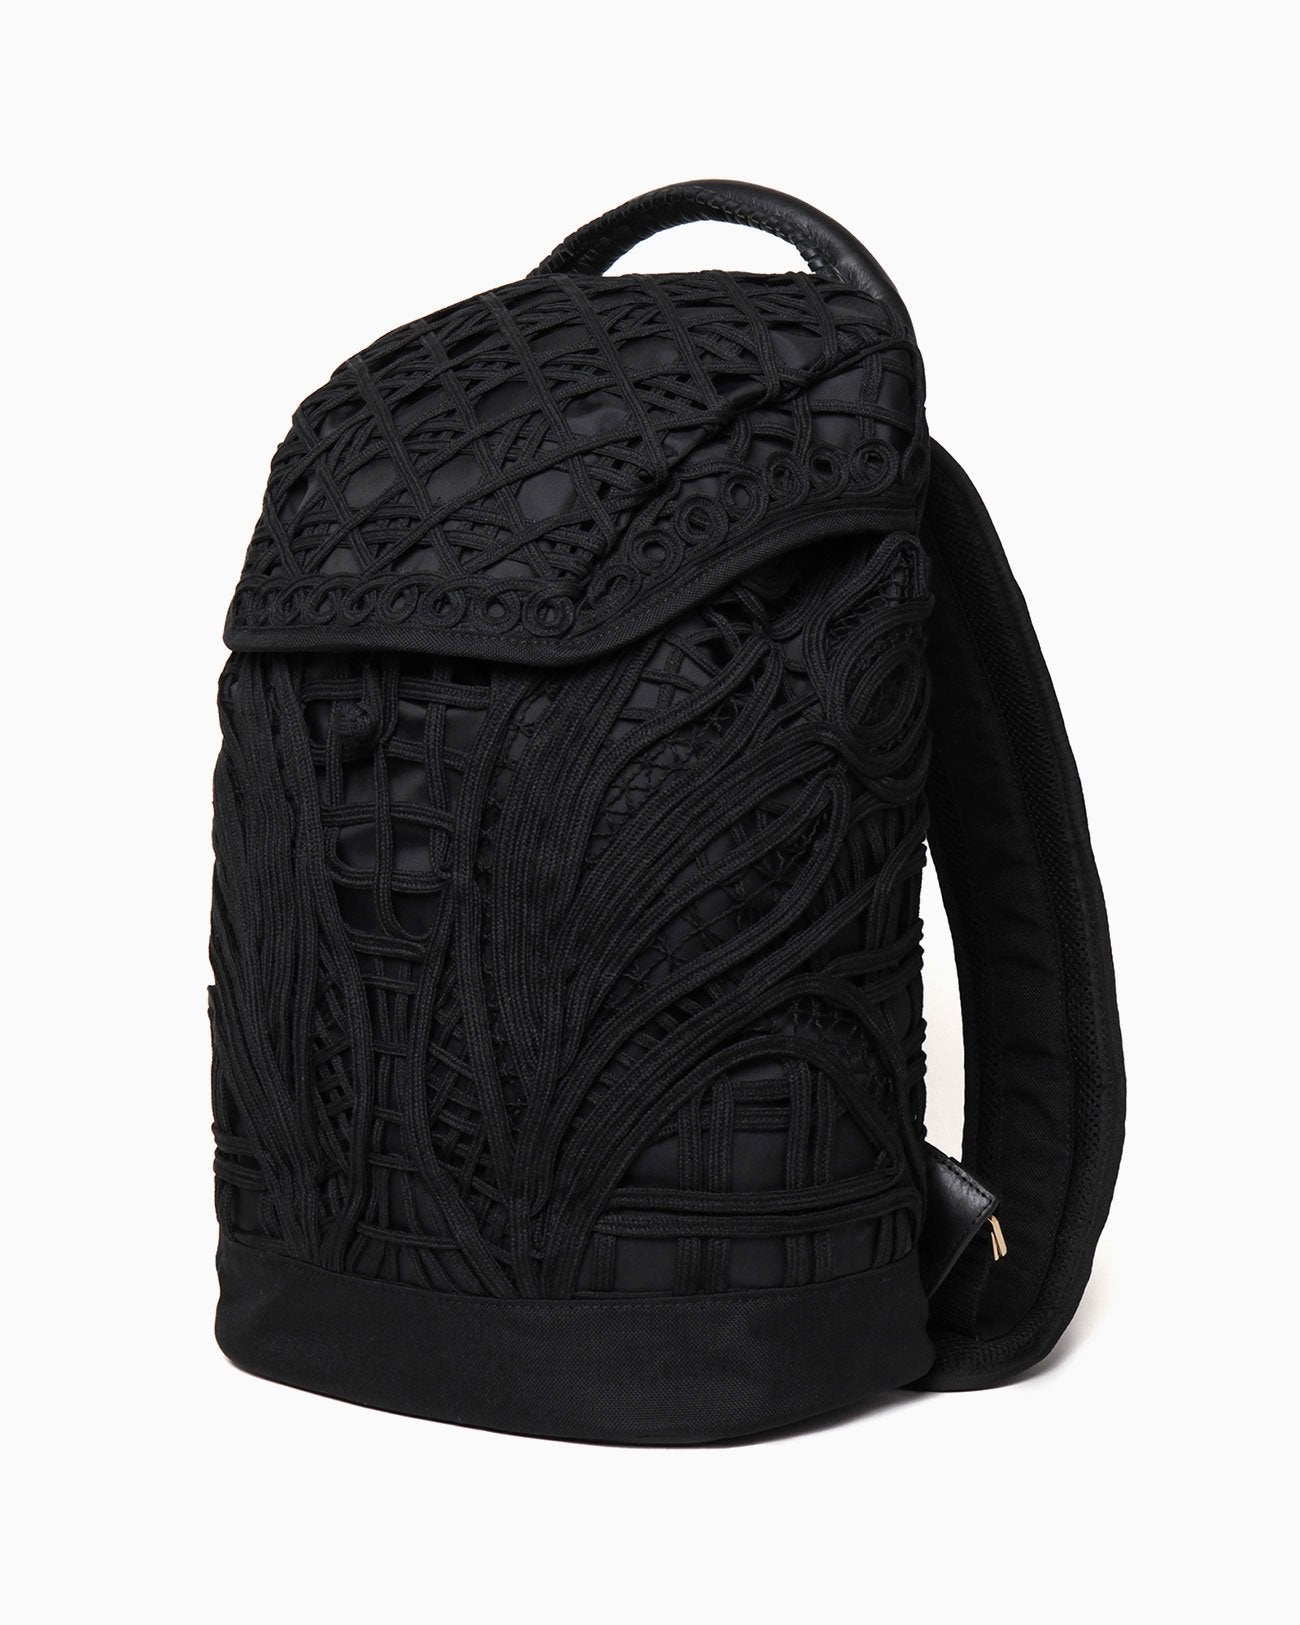 Cording Embroidery Backpack - black - Mame Kurogouchi